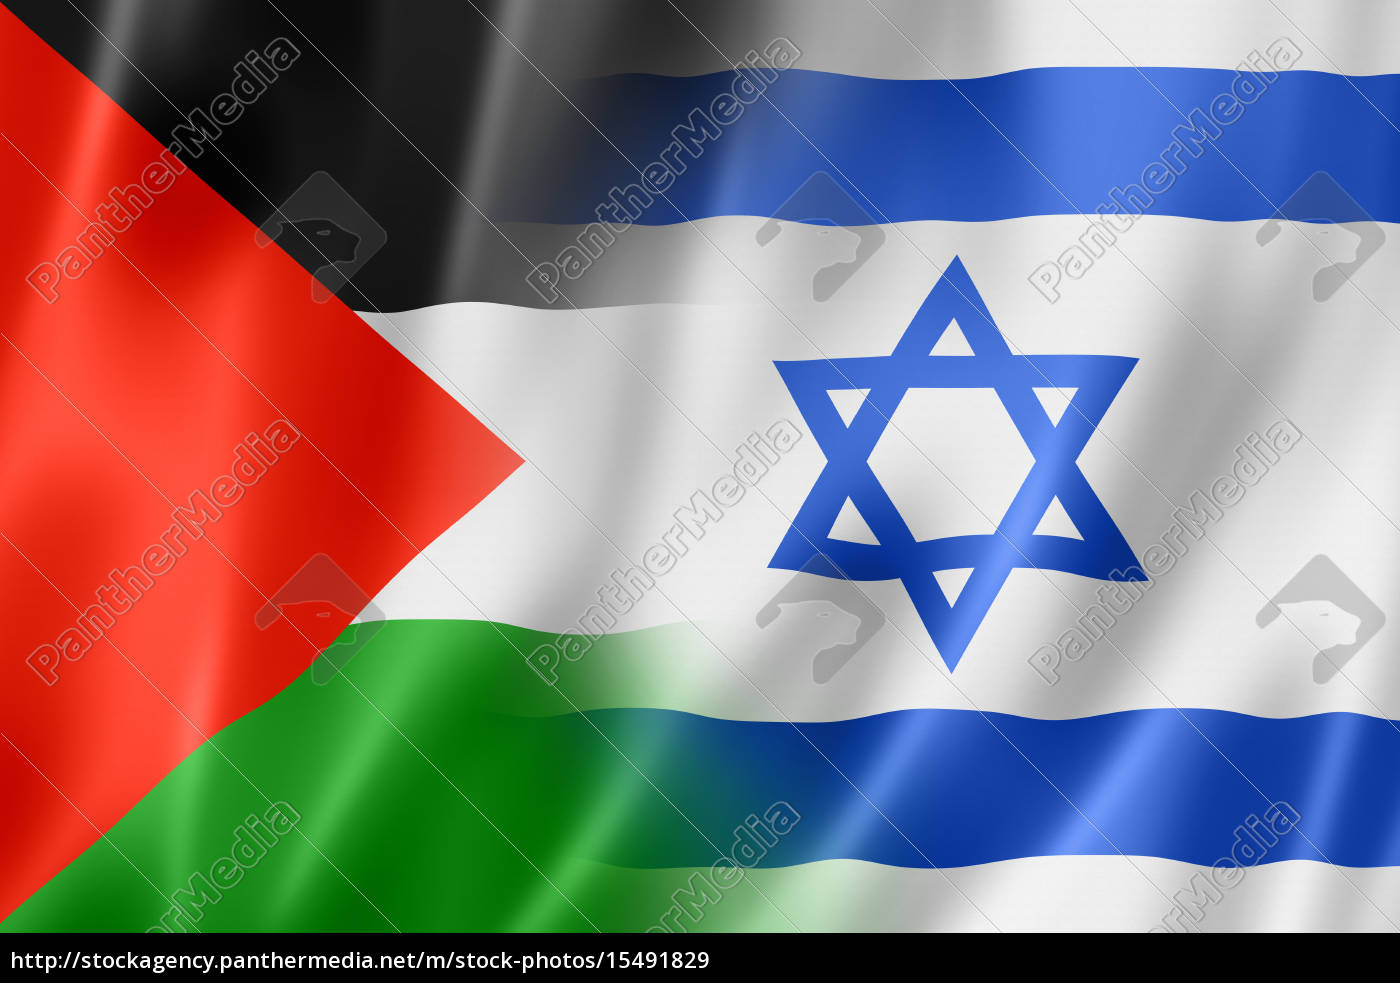 Palestine and Israel flag - Royalty free image #15491829